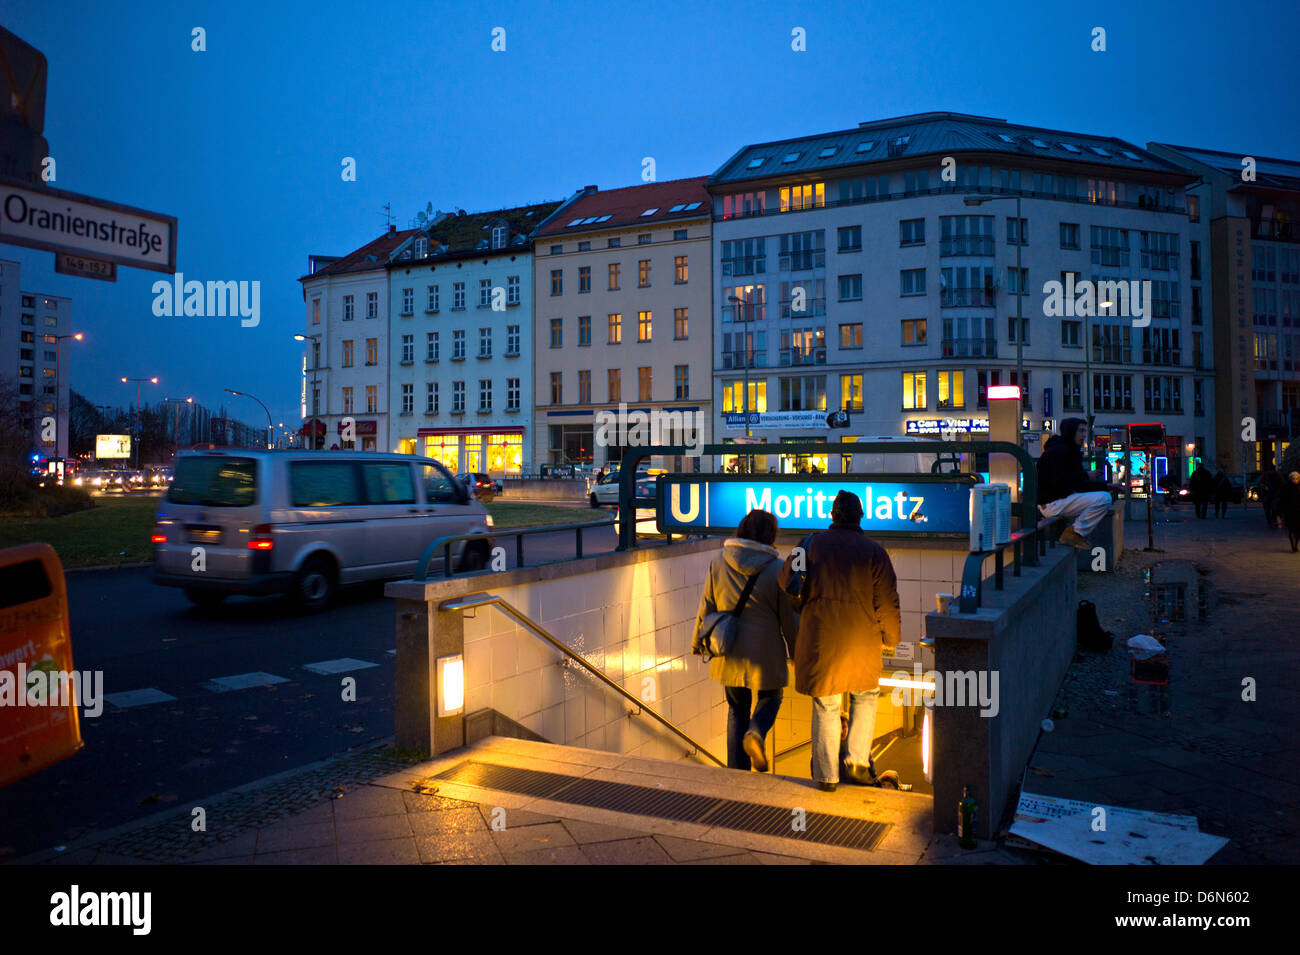 Berlin, Germany, the entrance to the metro station Moritzplatz Stock Photo